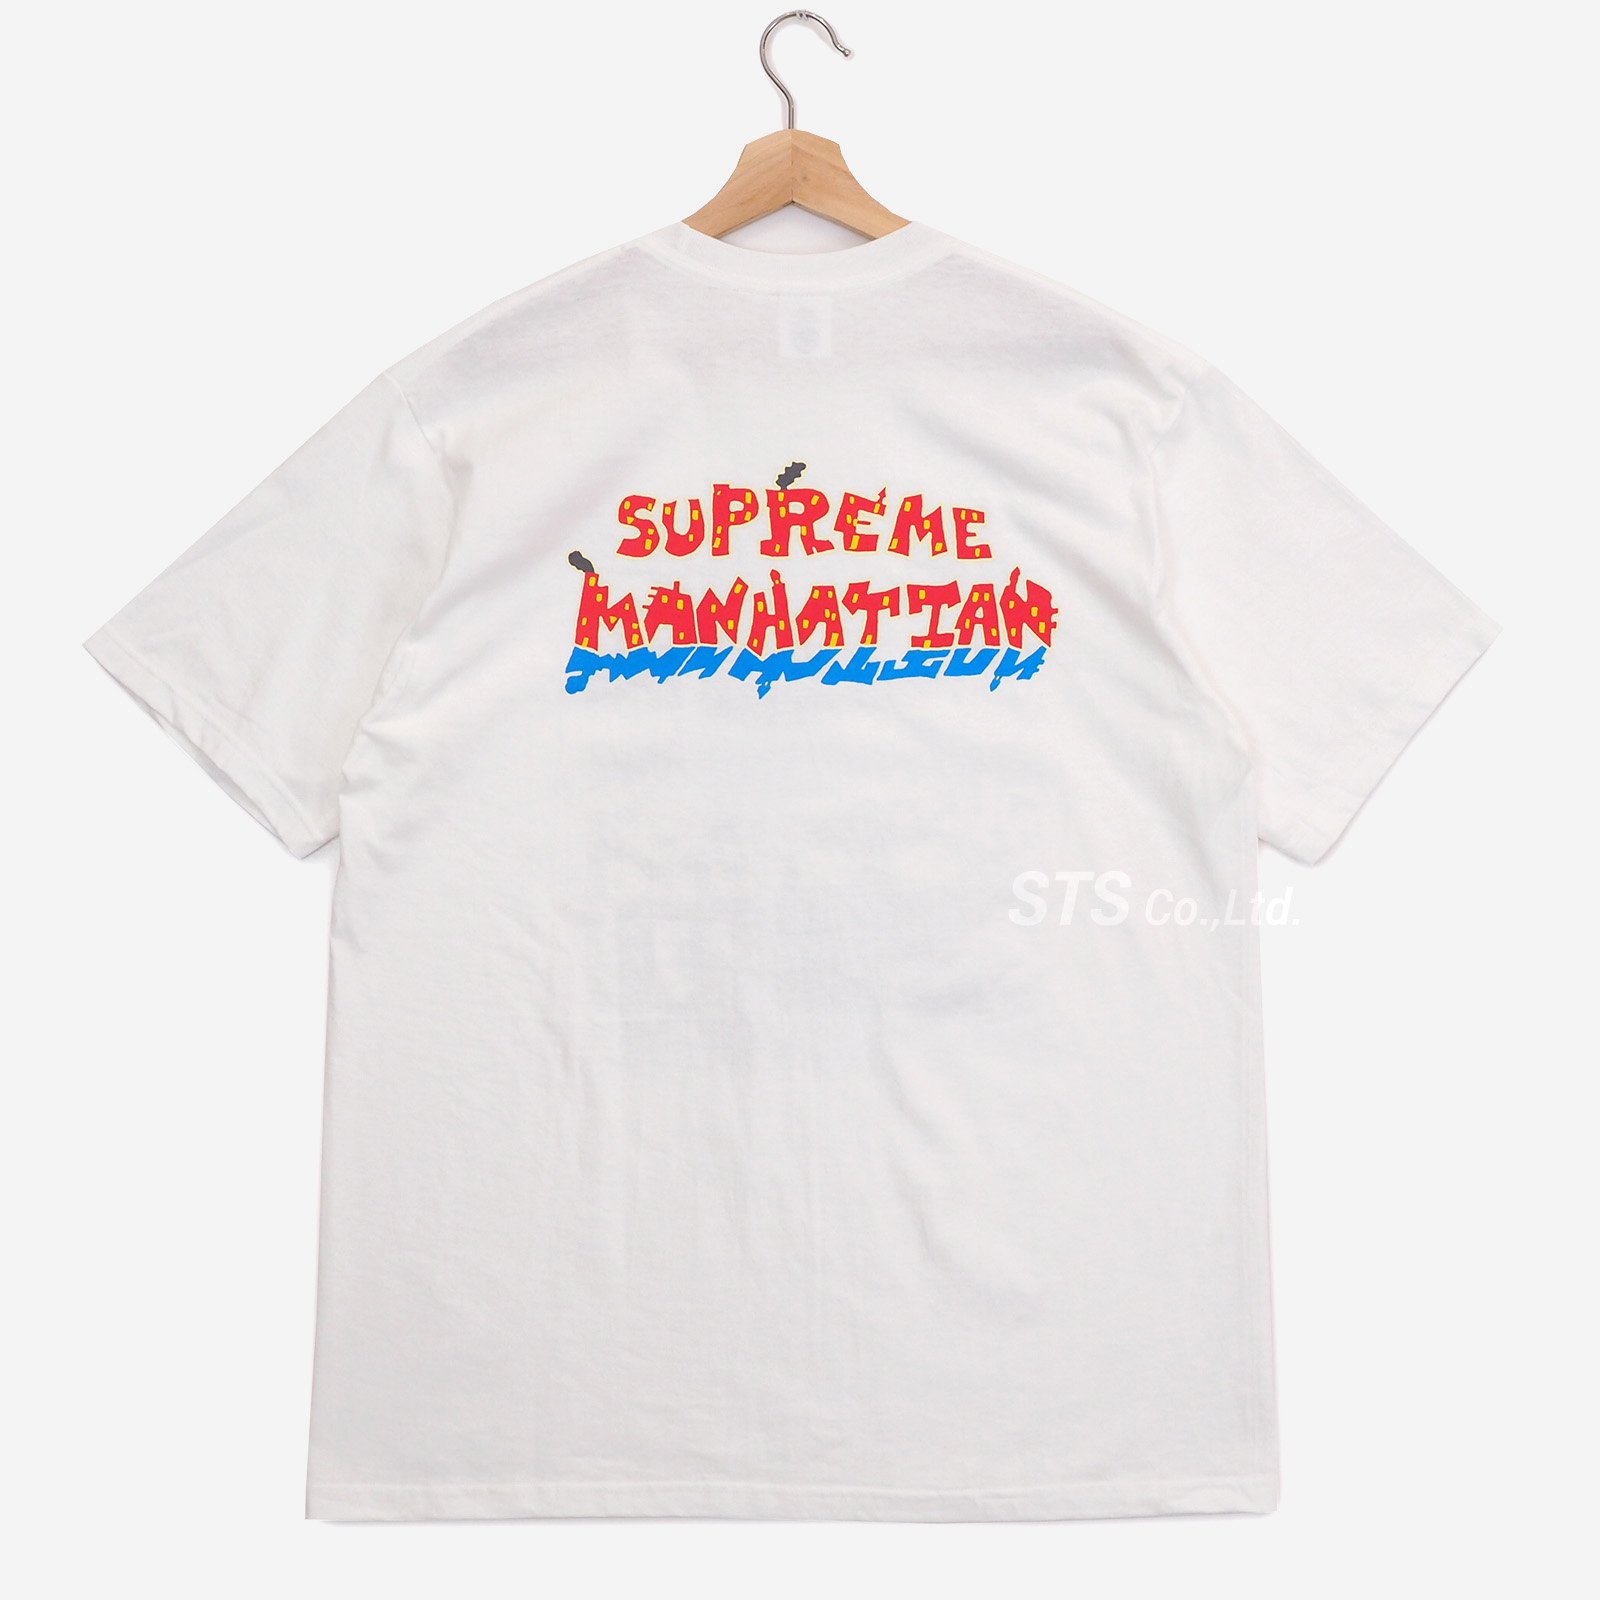 Tシャツ/カットソー(半袖/袖なし)Supreme Manhattan Tee XL